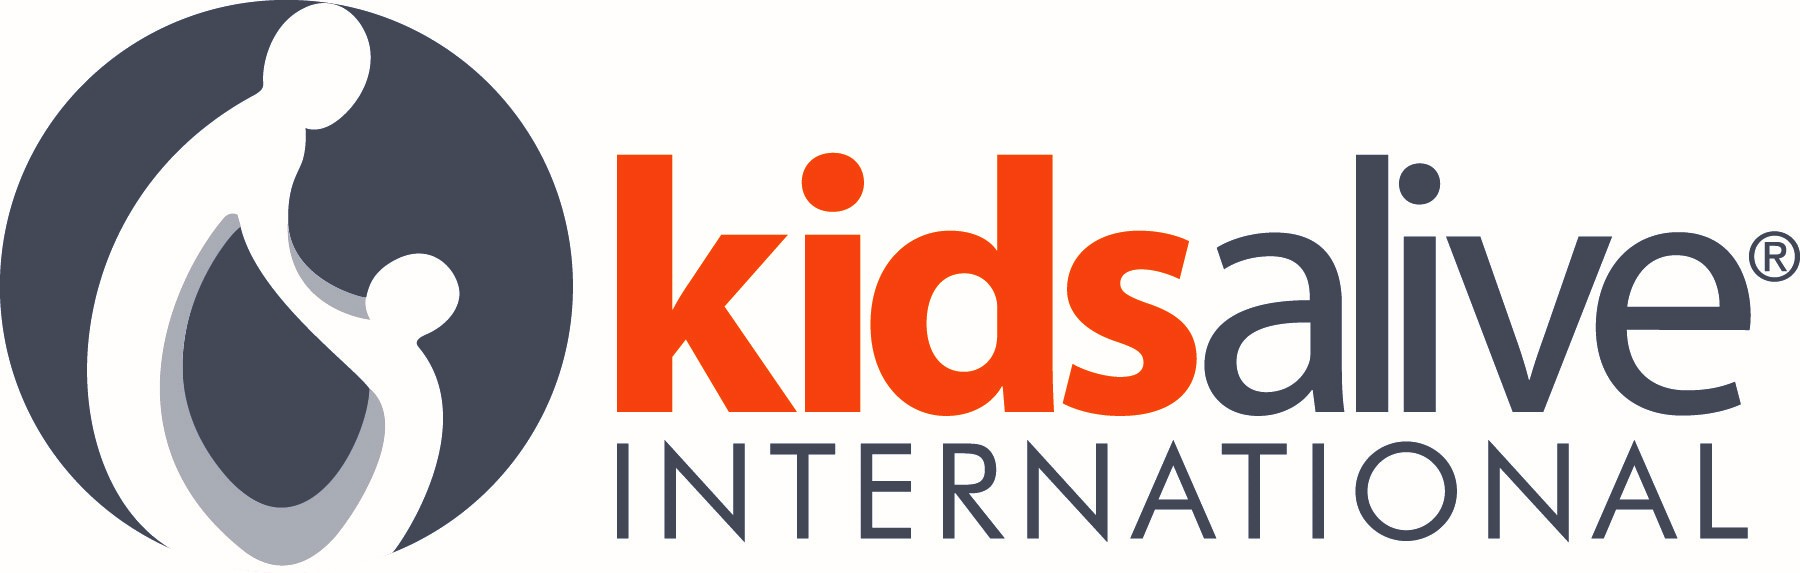 KidsAlive logo